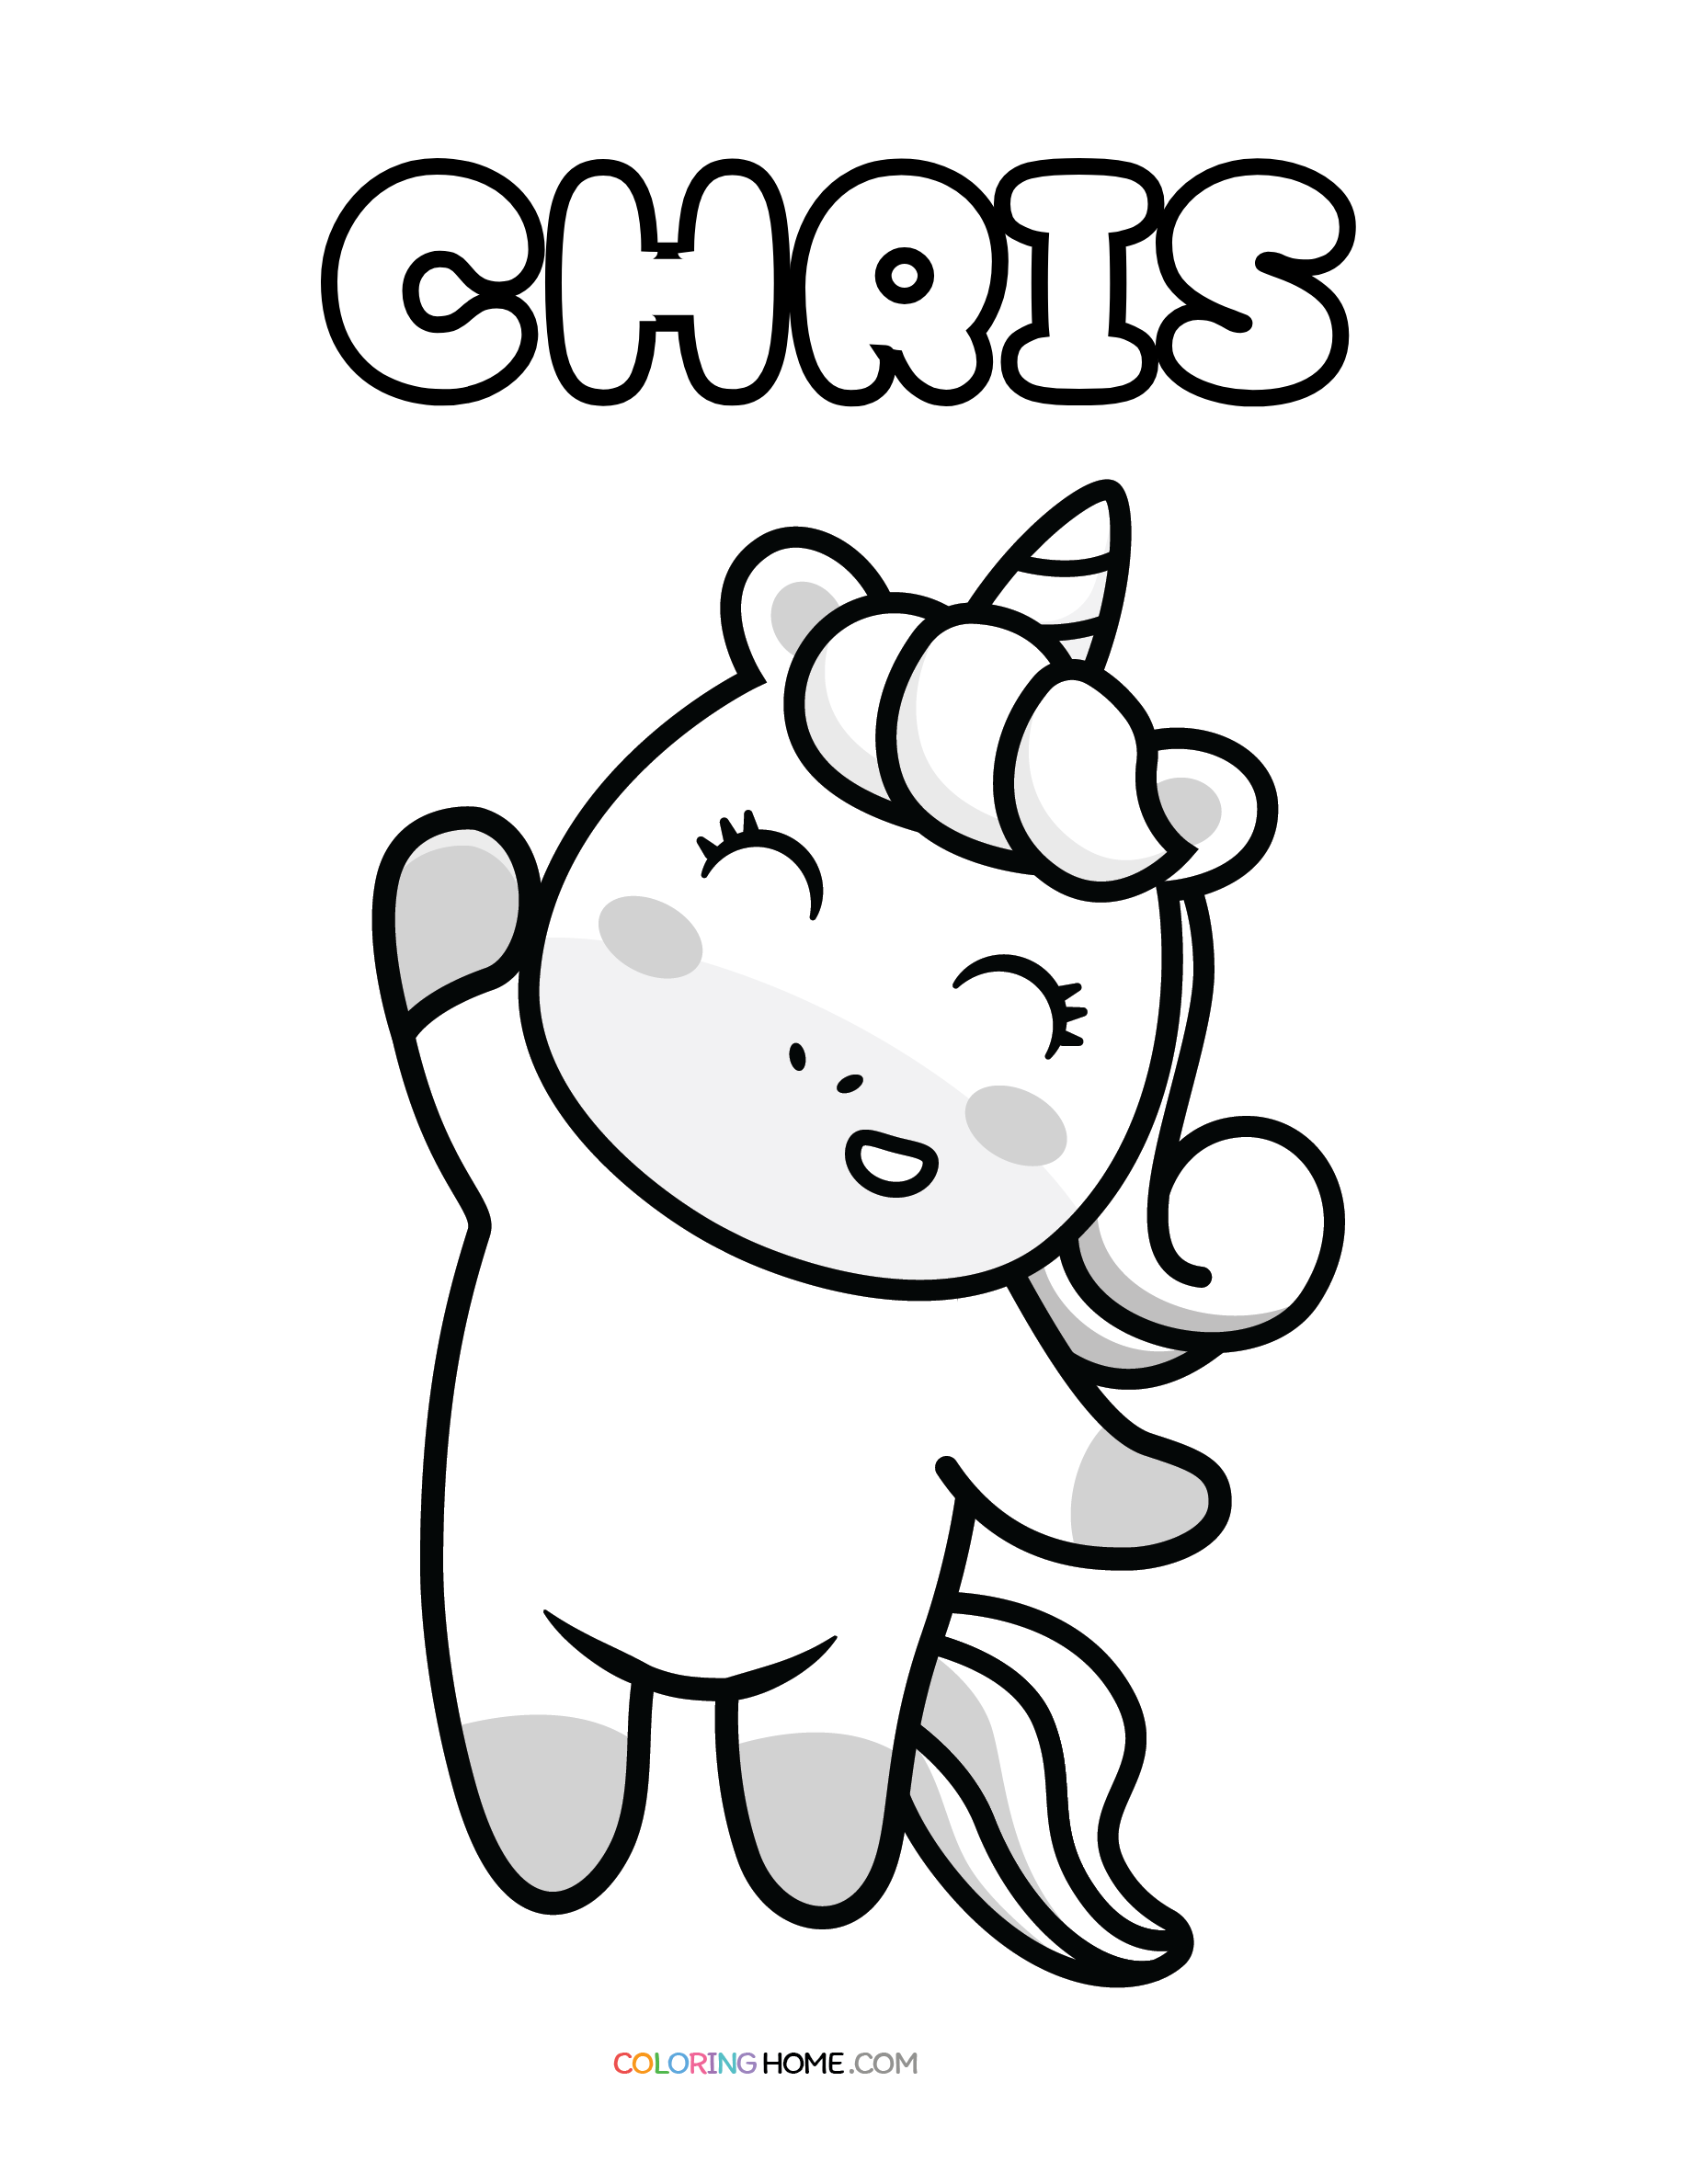 Chris unicorn coloring page